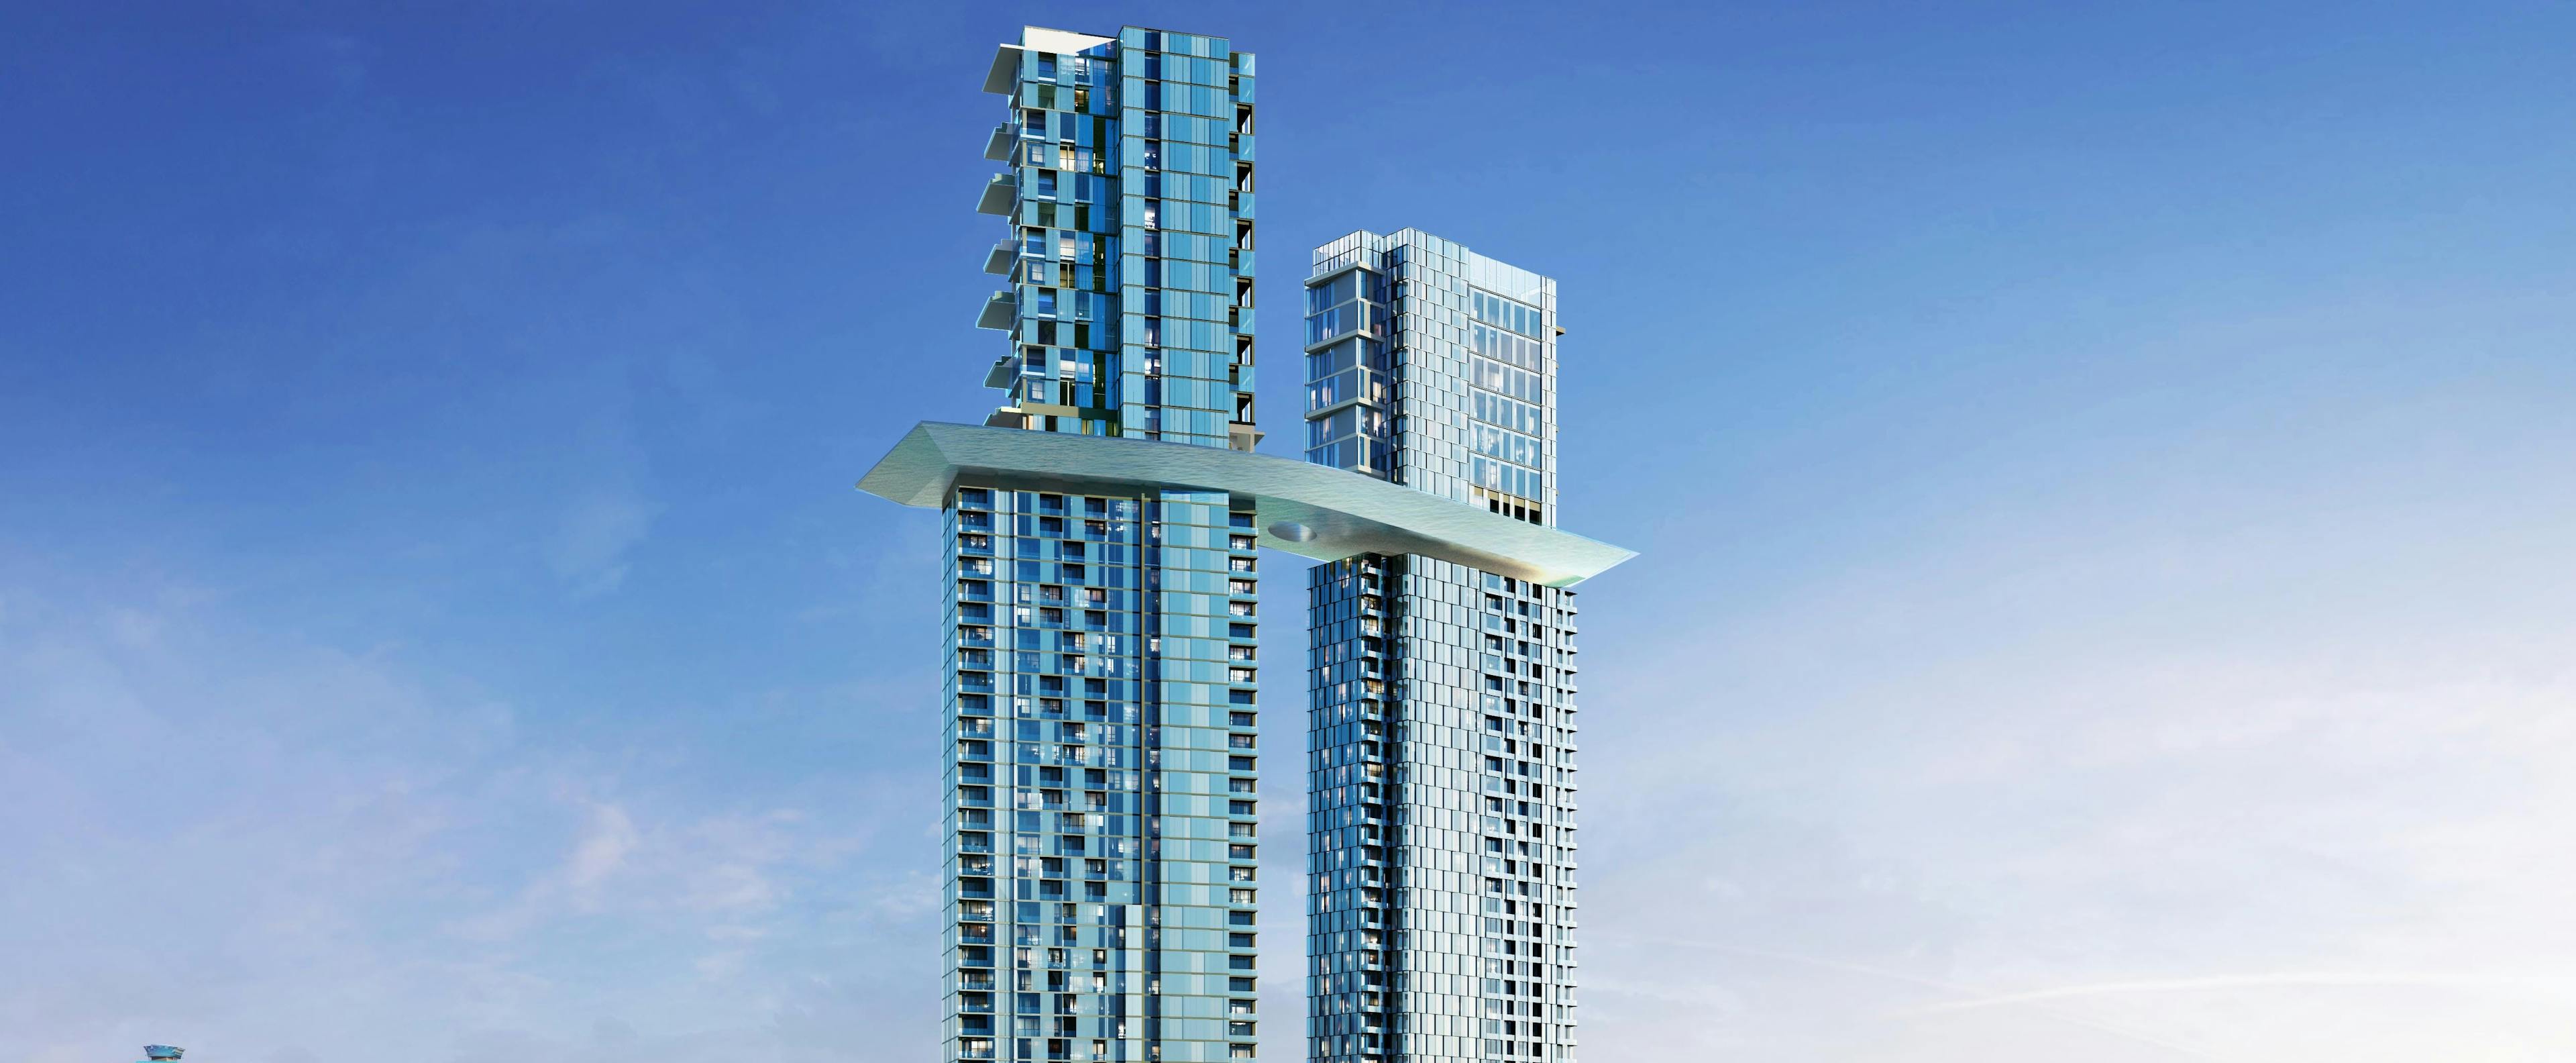 condo building housing high rise city urban town apartment building architecture